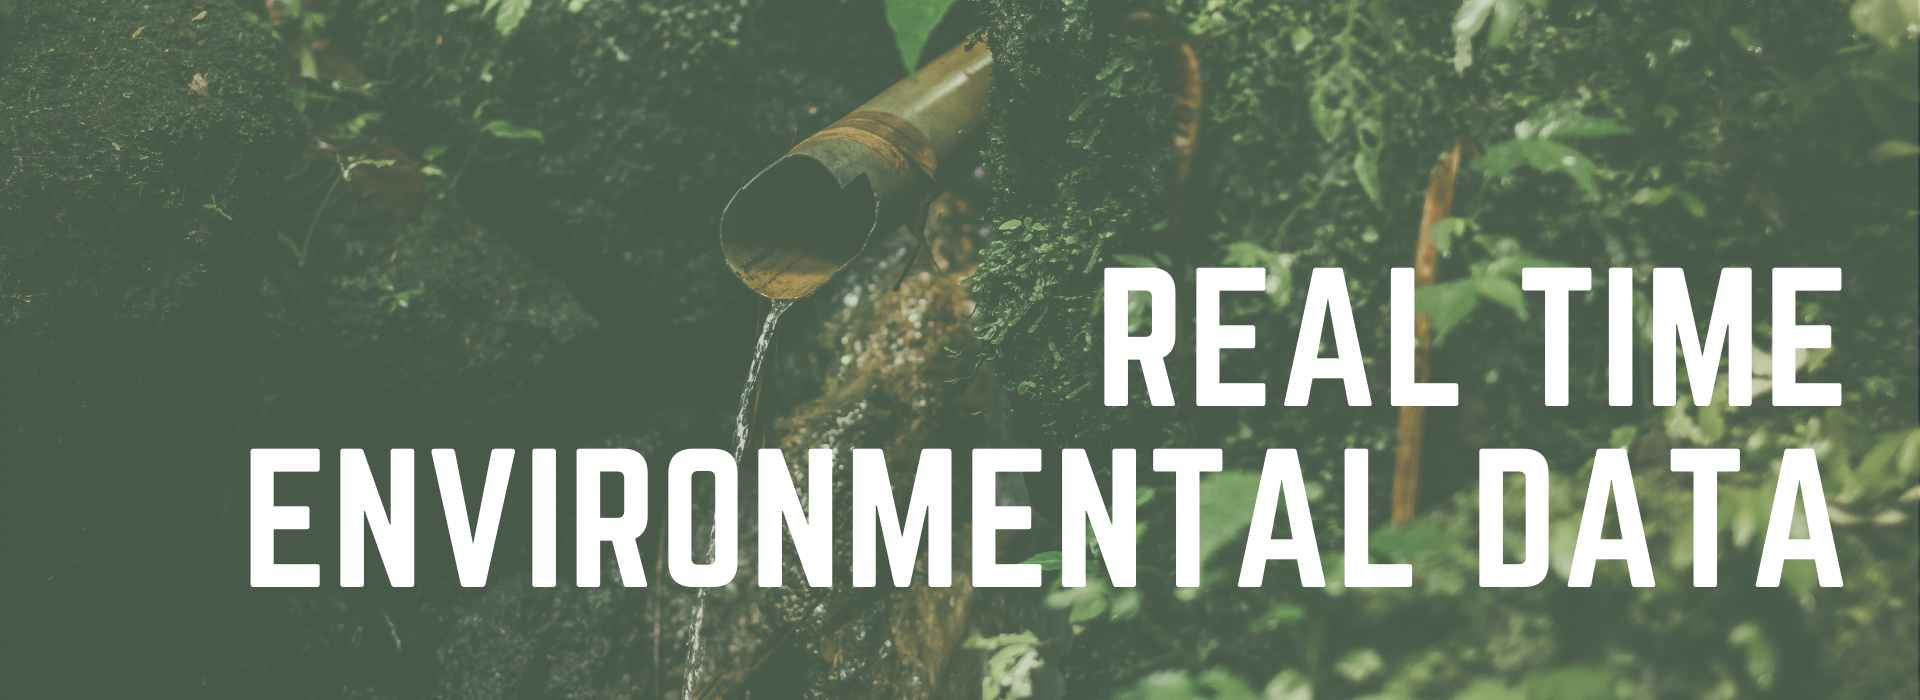 Real Time Environmental Data - Remote Monitoring